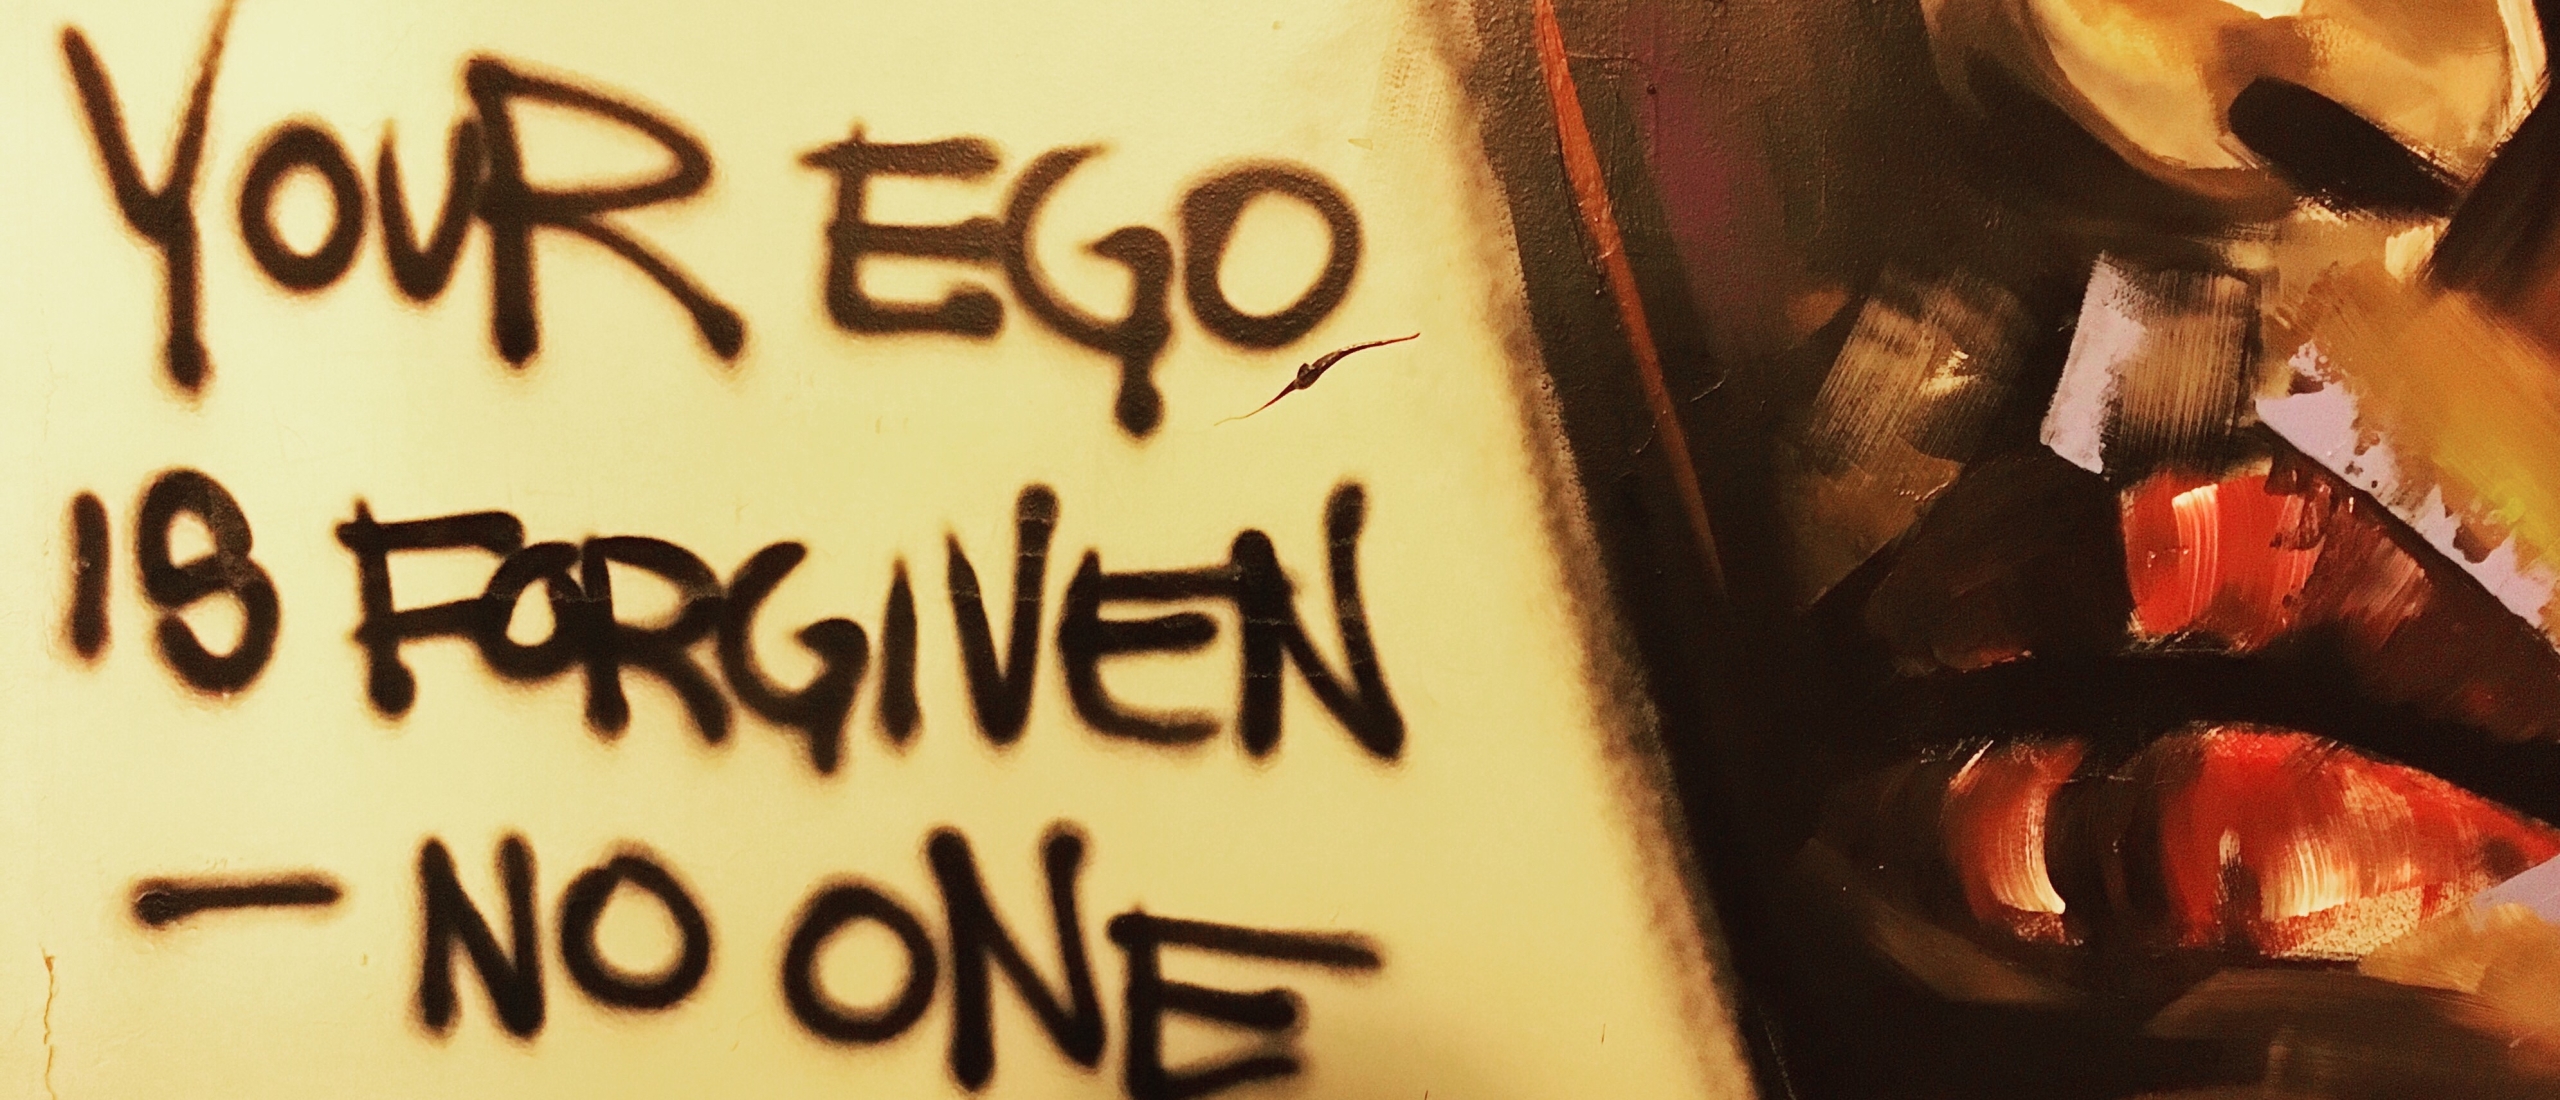 The big bad ego myth